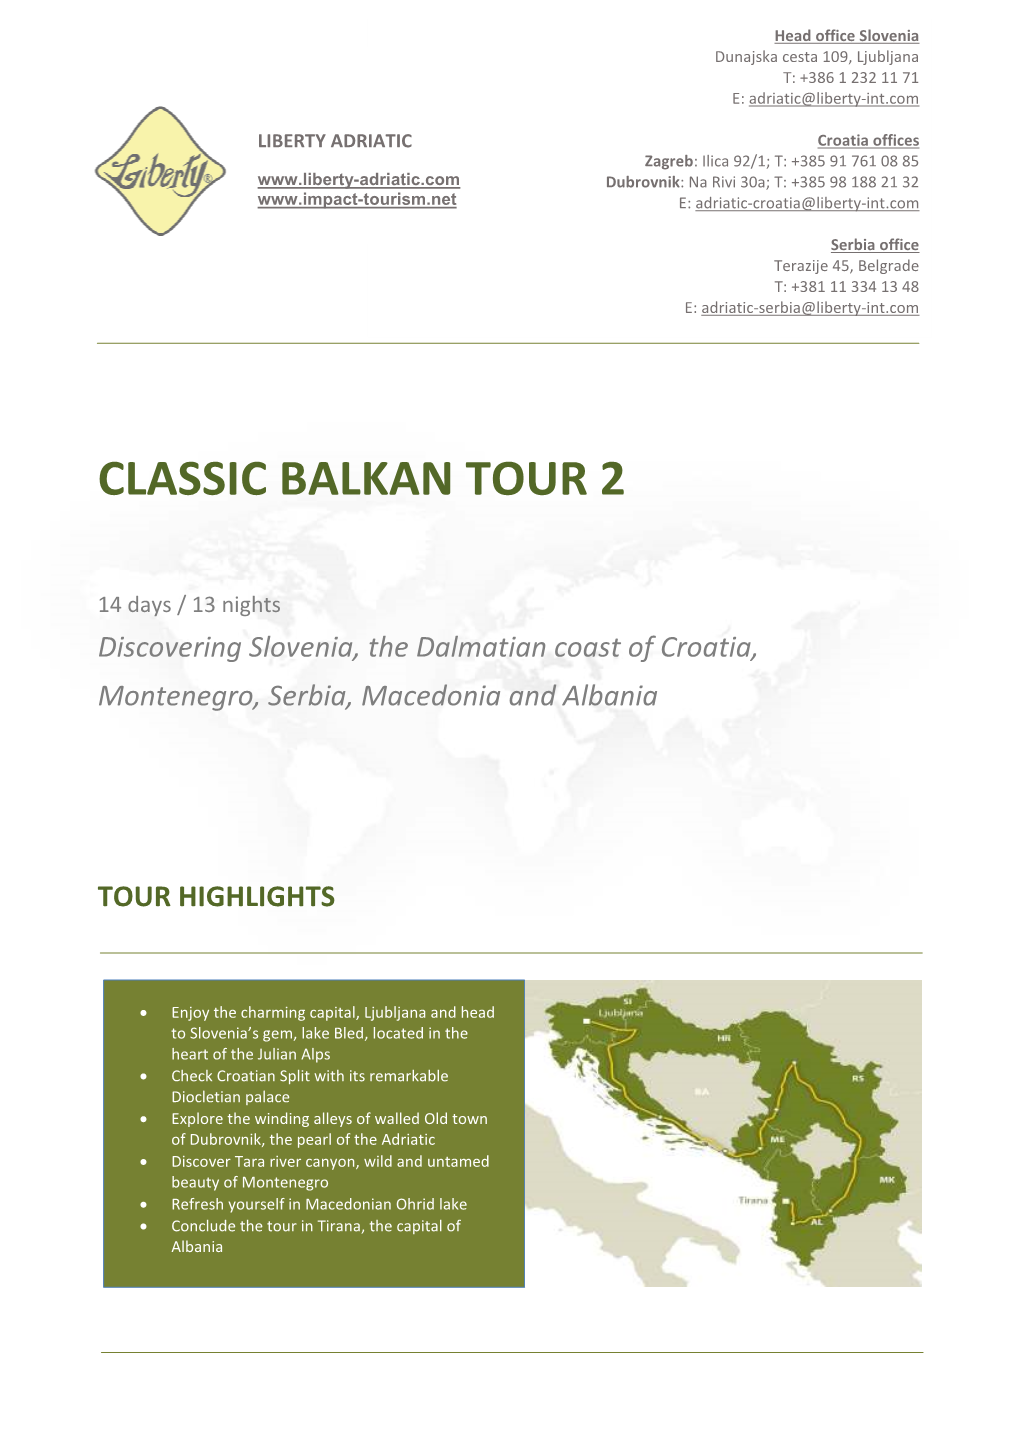 Classic Balkan Tour 2